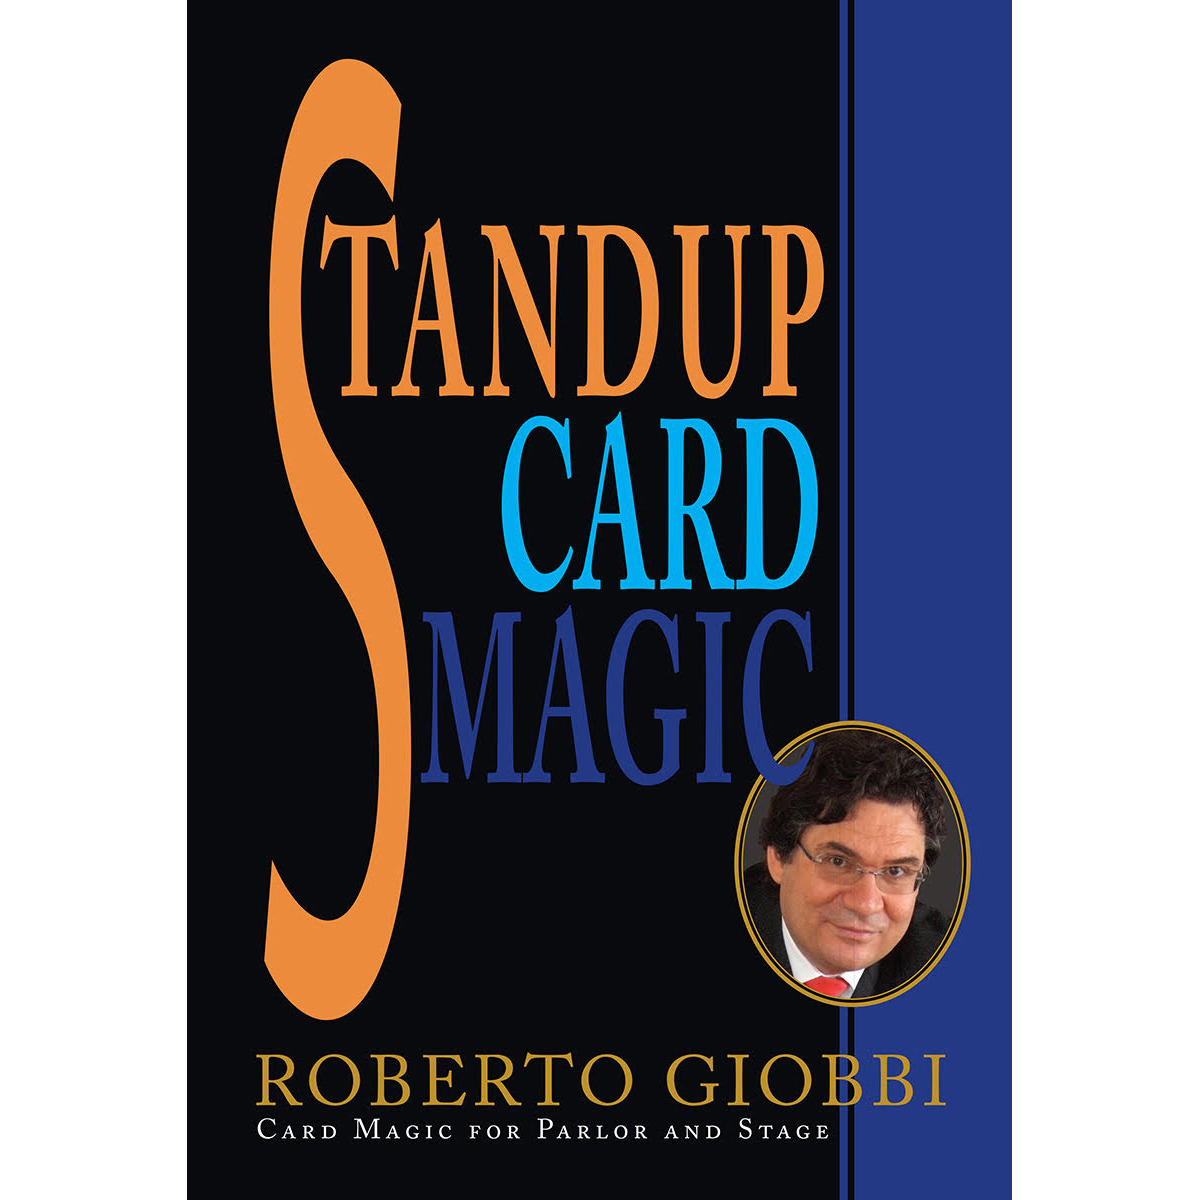 Standup Card Magic by Roberto Giobbi (PDF download)